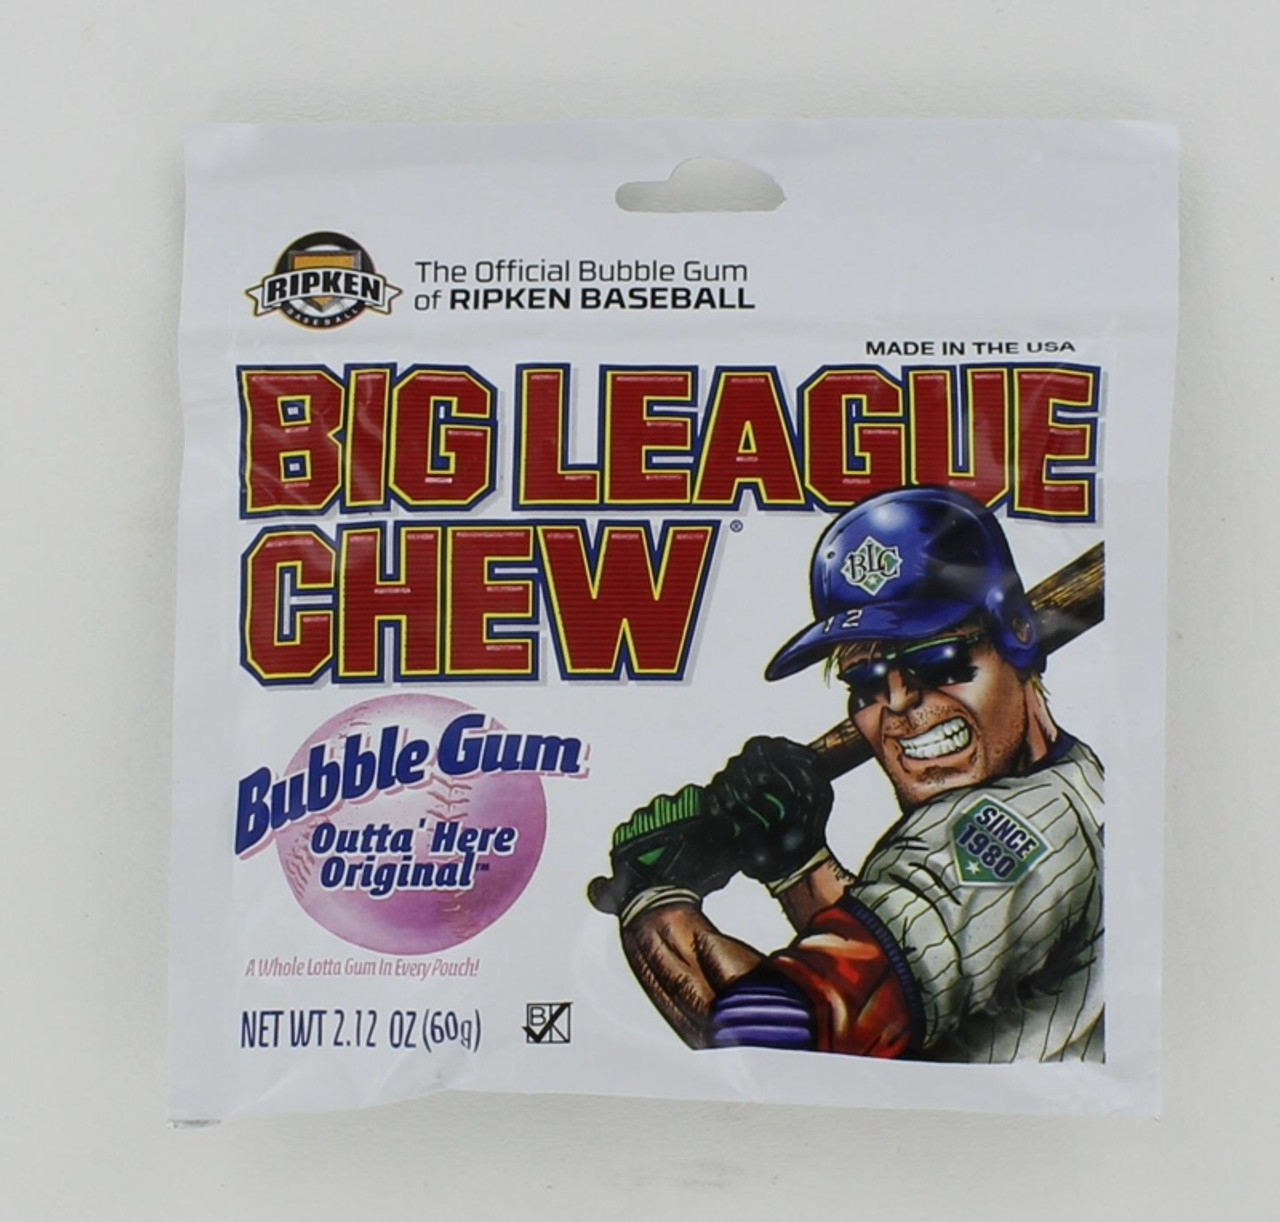 Big League Chew